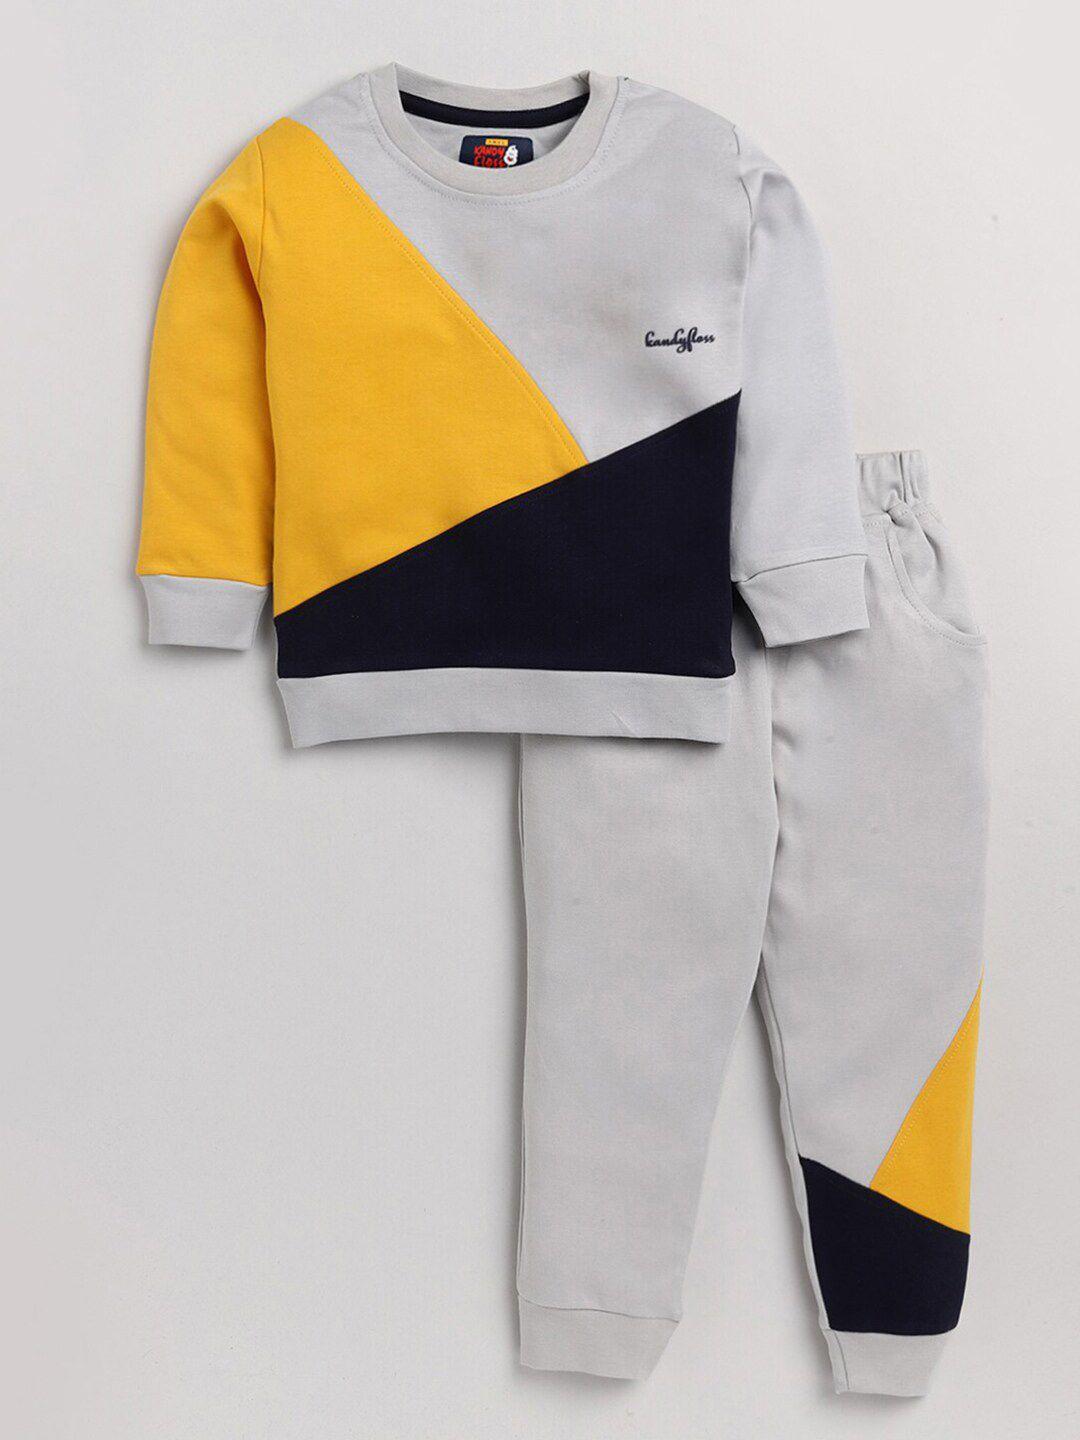 AMUL Kandyfloss Kids Grey Melange & Yellow Cotton Colourblocked Top with Pyjama Set